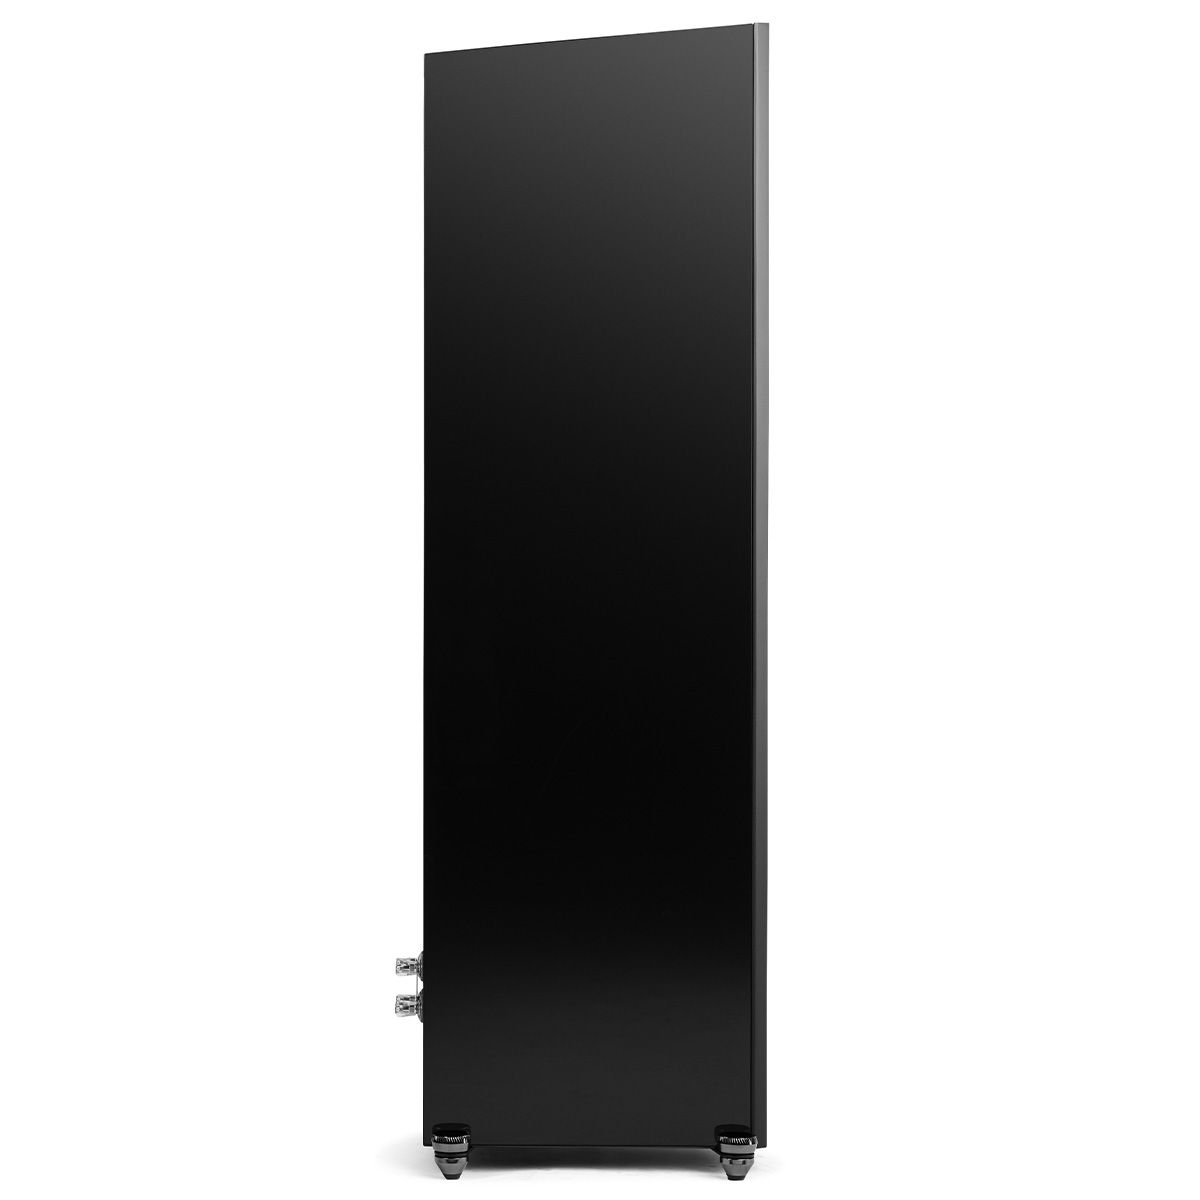 MartinLogan Motion XT F200  Floorstanding Speaker in black, side view 